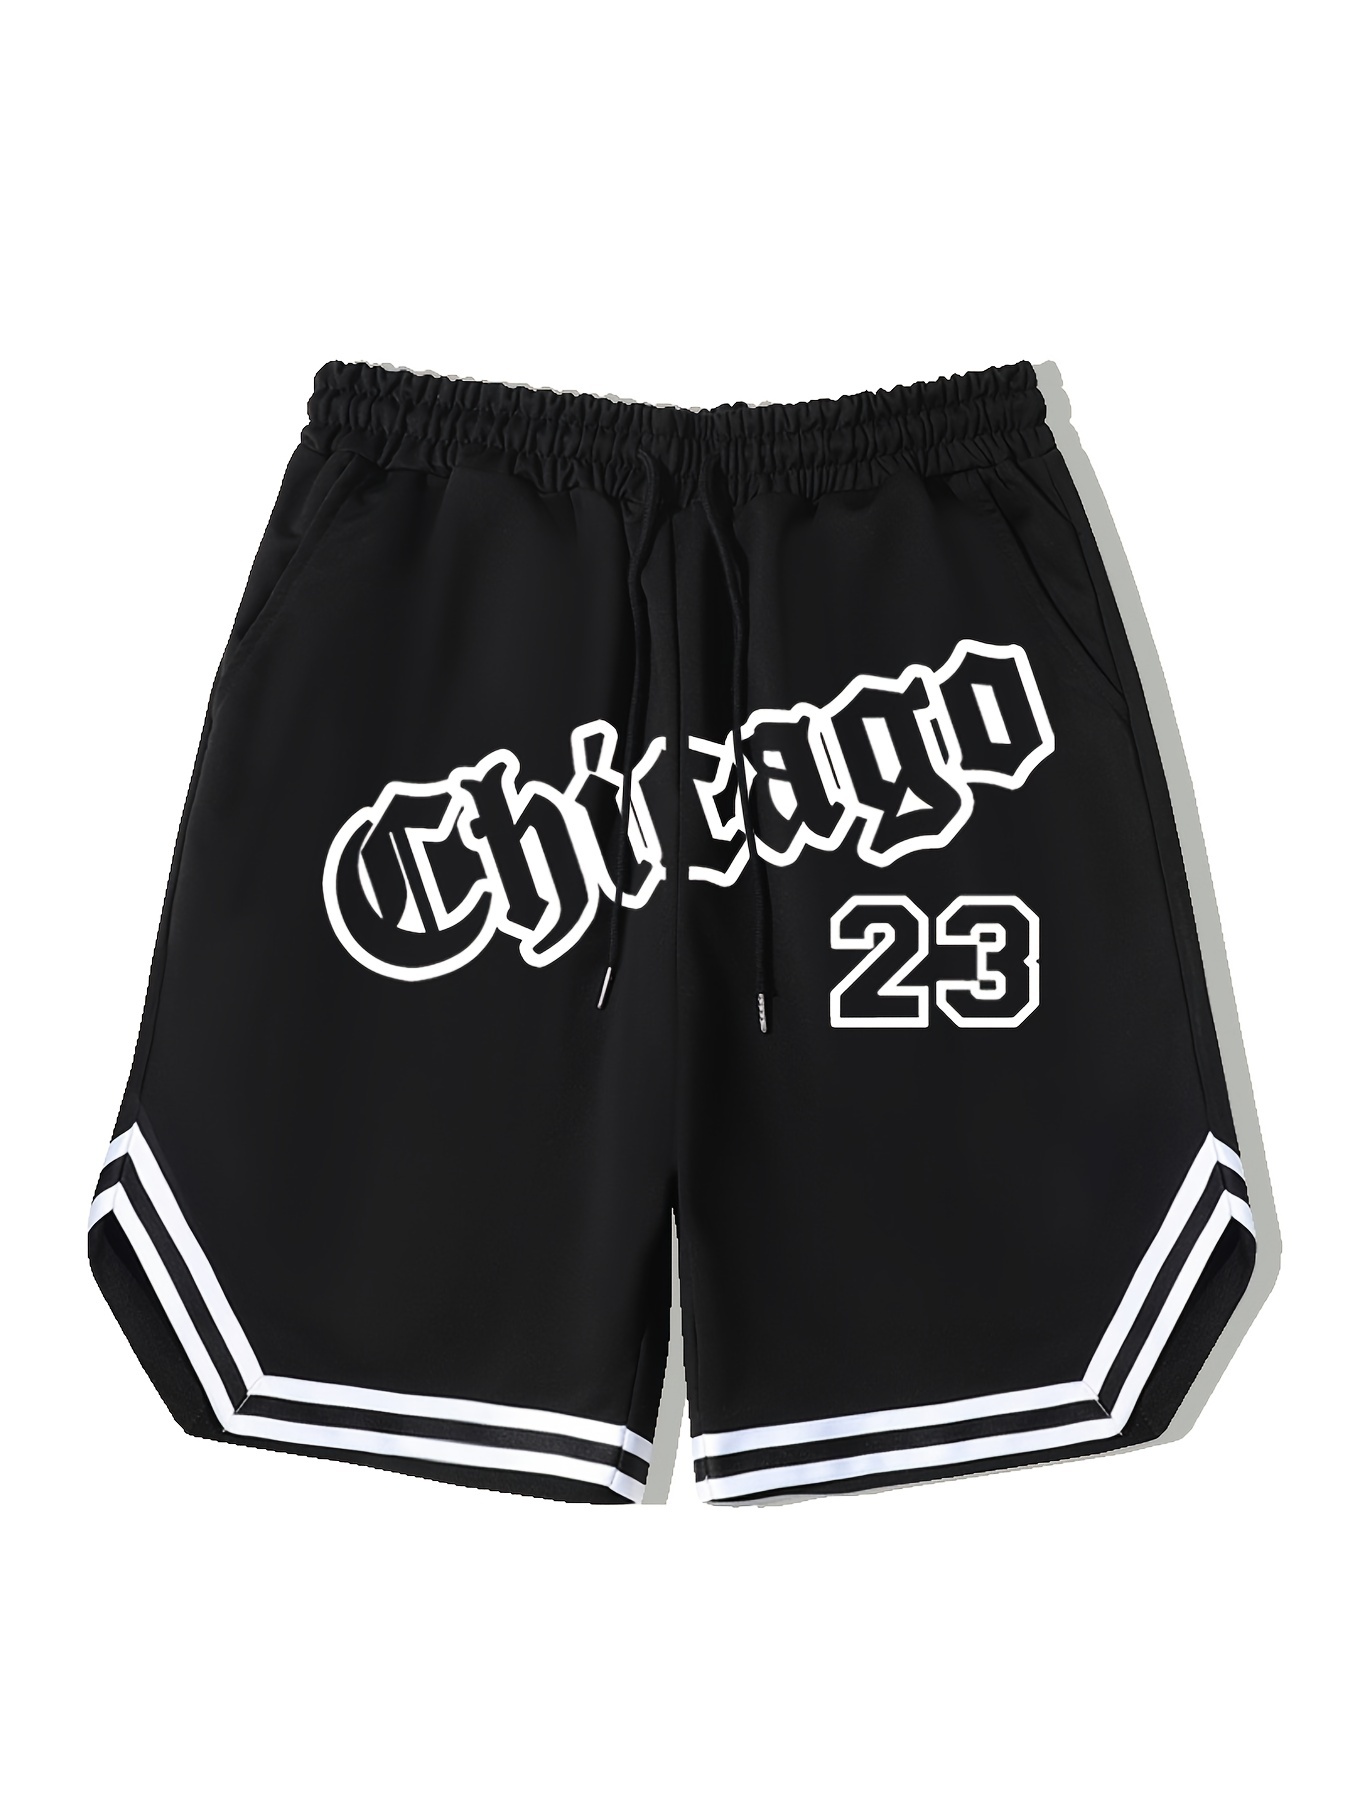 chicago bulls shorts mens